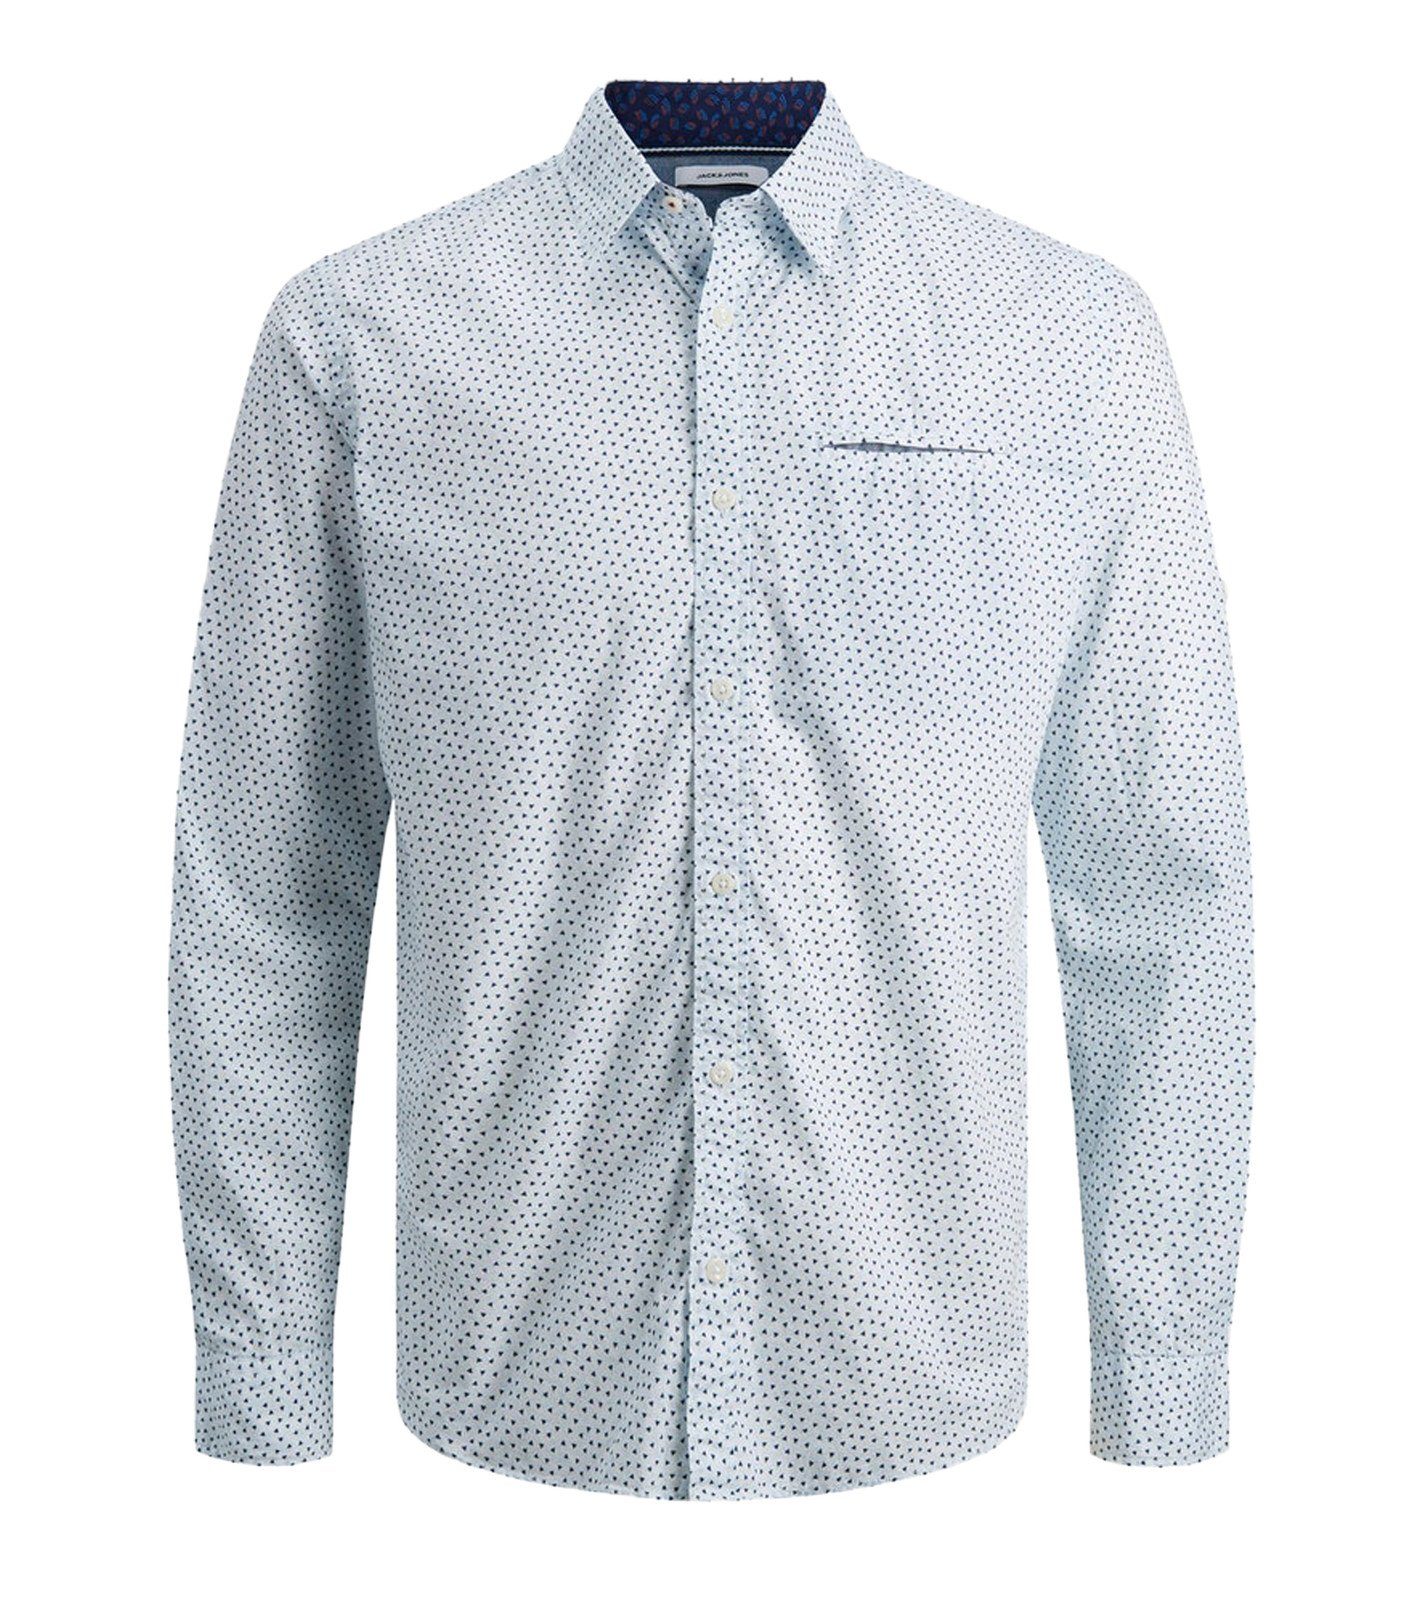 Herren Hemden Jack & Jones Langarmhemd JACK & JONES Herren Slim Fit-Hemd Business-Shirt Matthew Shirt Langarm-Hemd Blau/Weiß